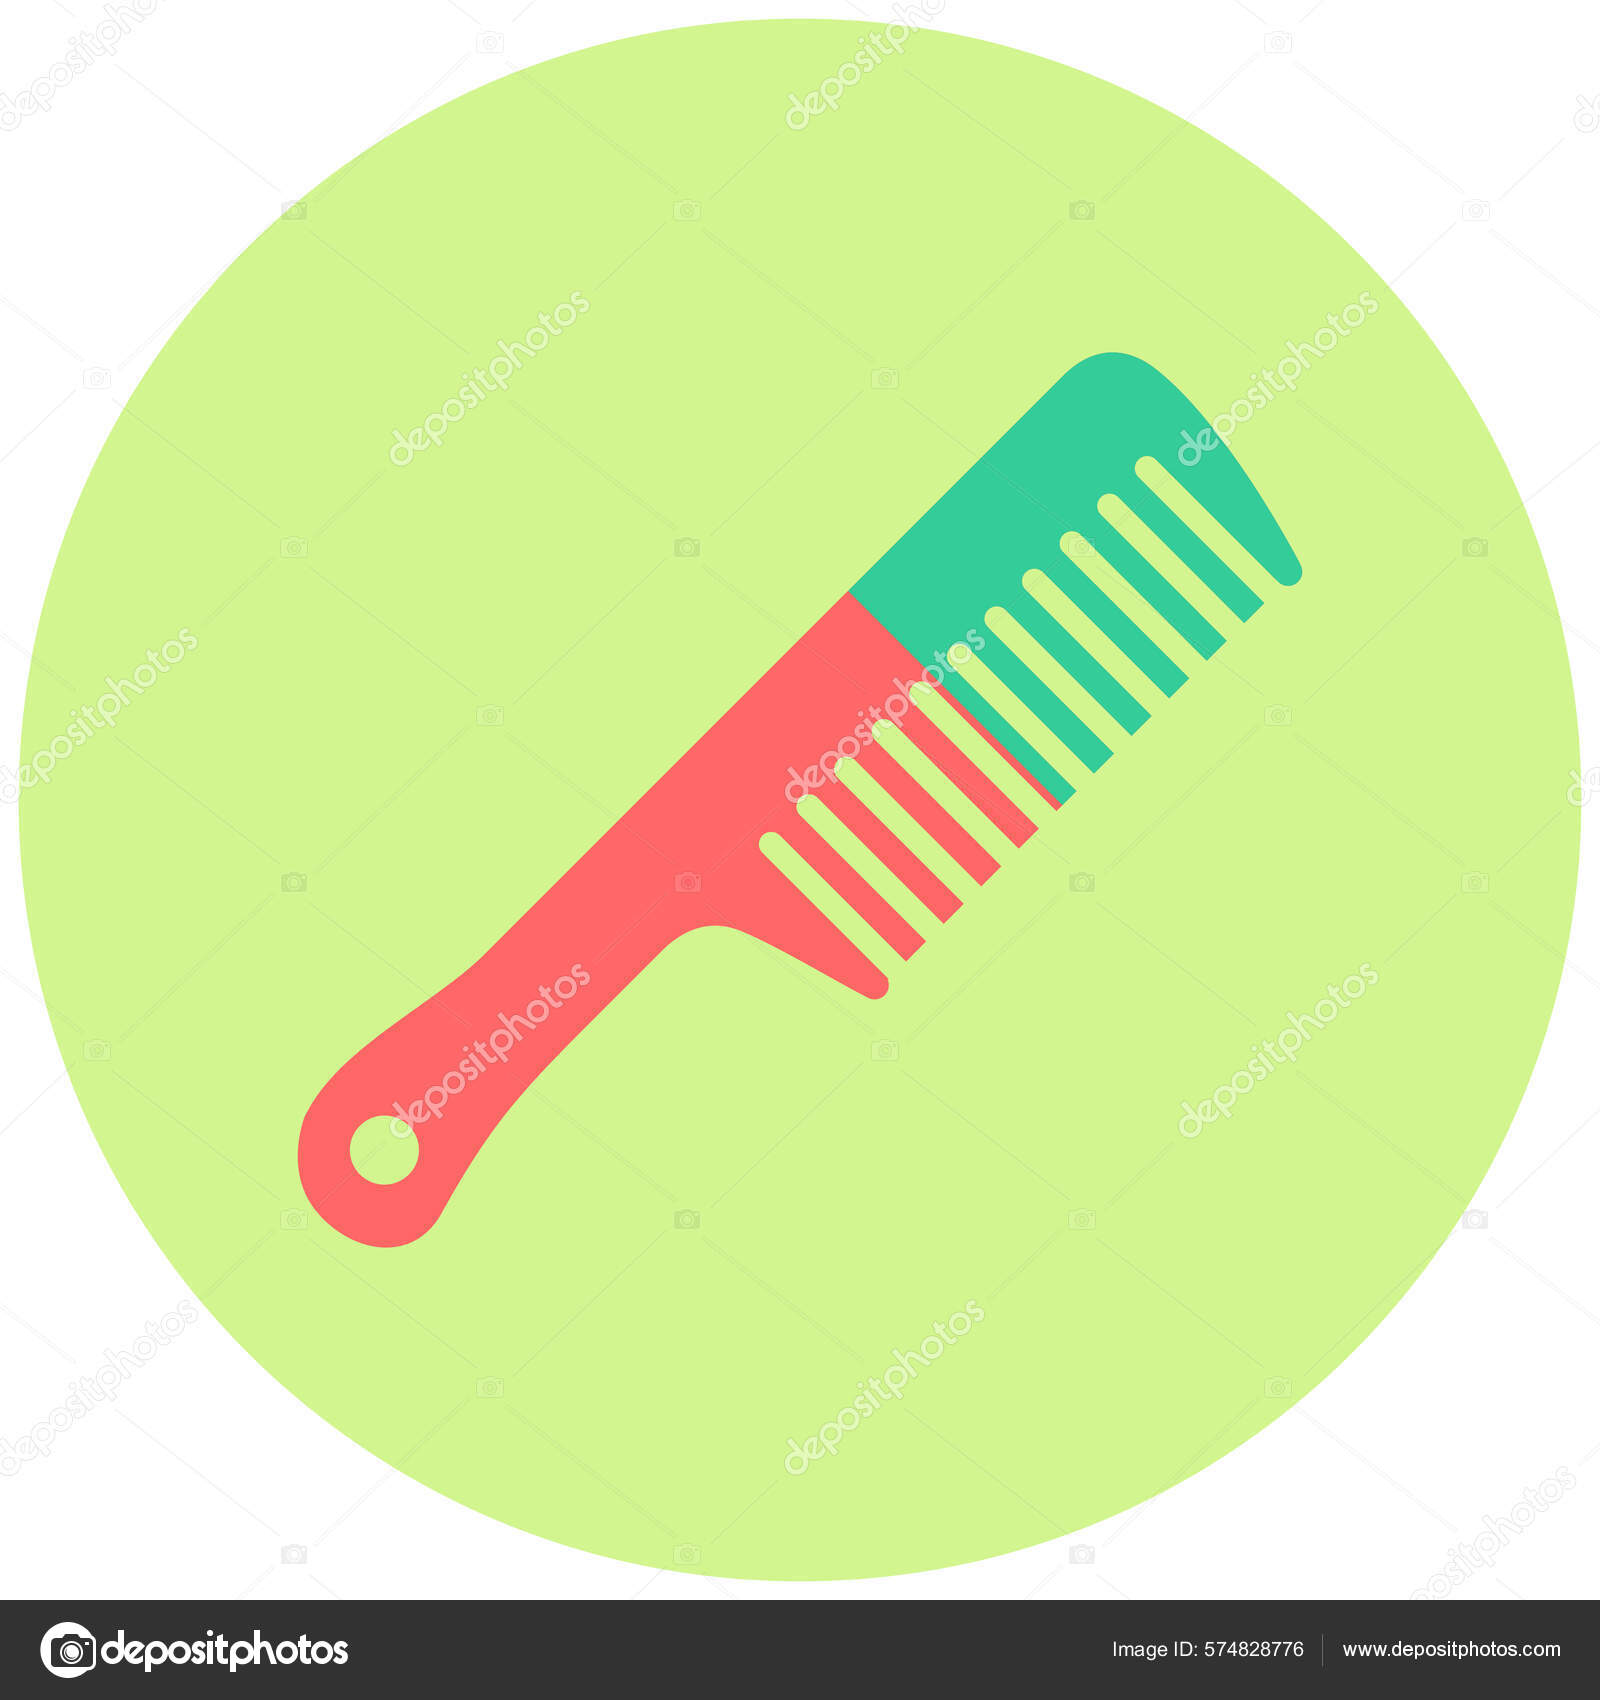 2022 Edition Hair-Weaving Comb (BLACK) – 3D BALAYAGE